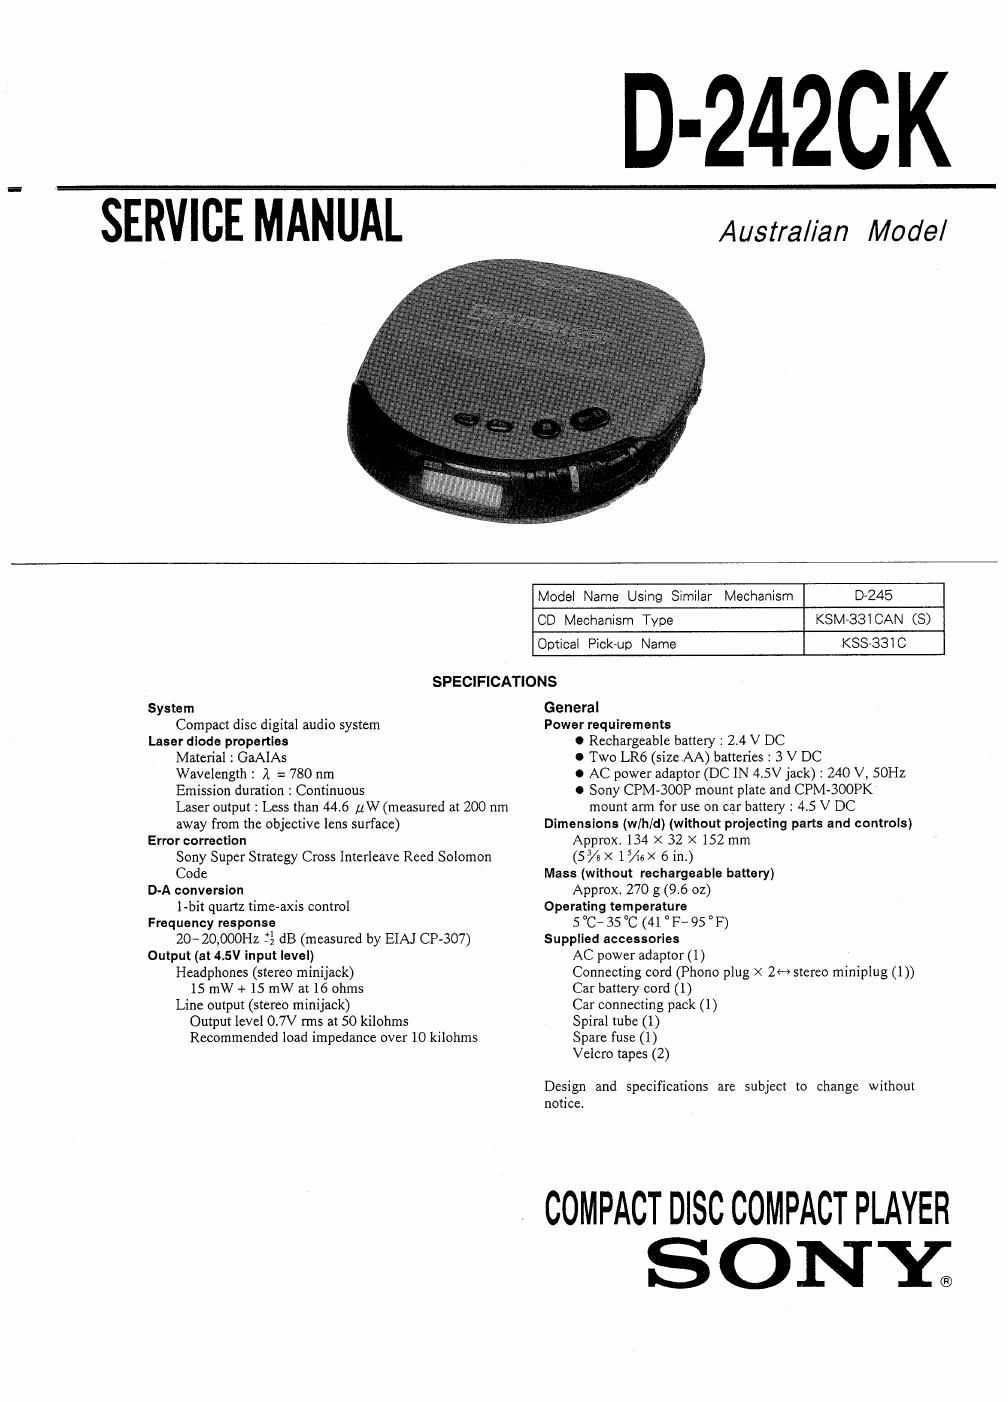 sony d 242 ck service manual